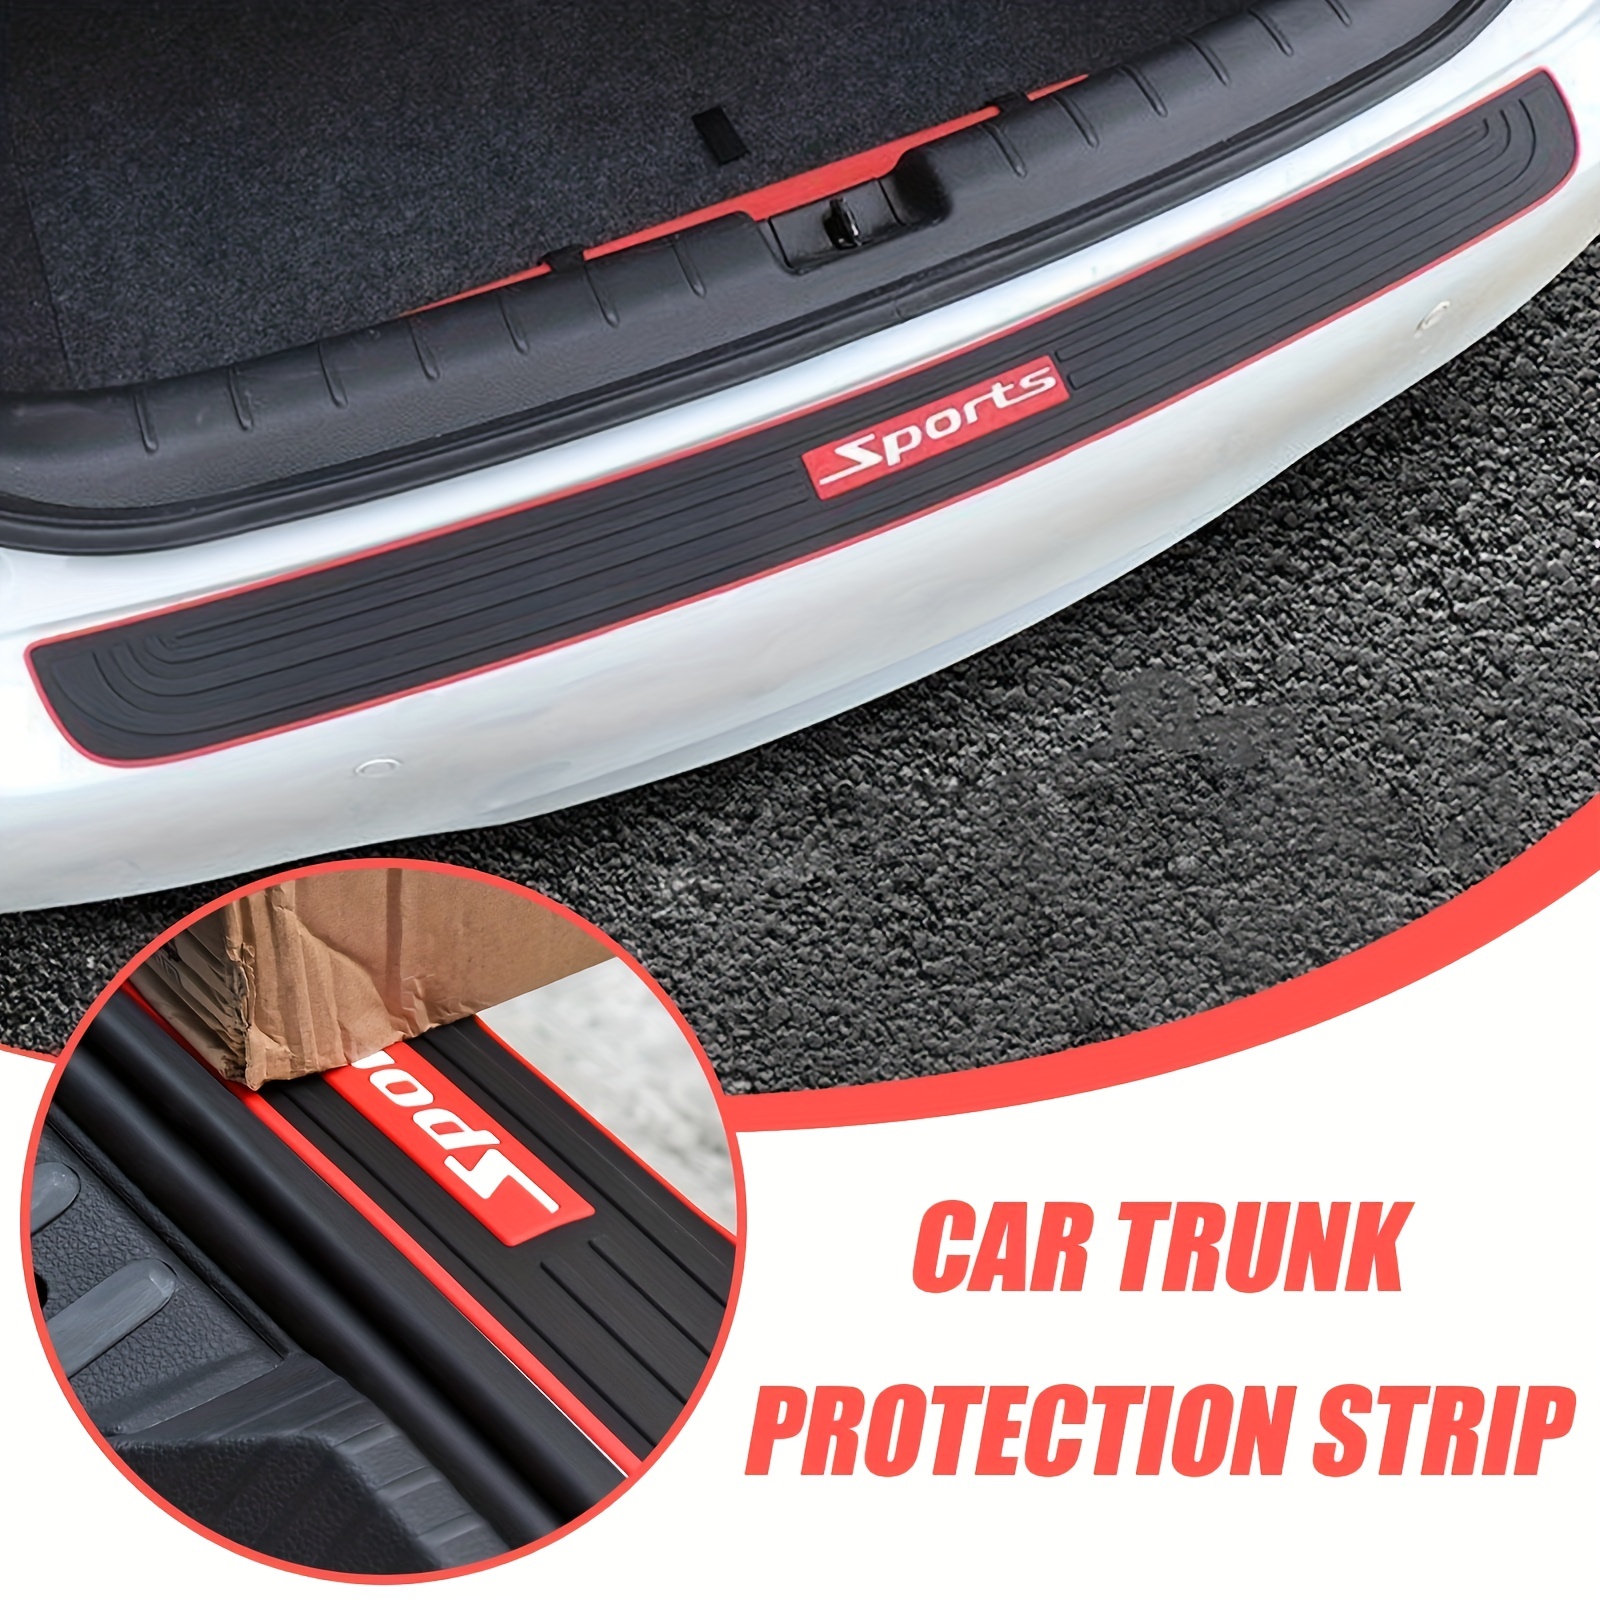 Shop Car Trunk Protection Strip online